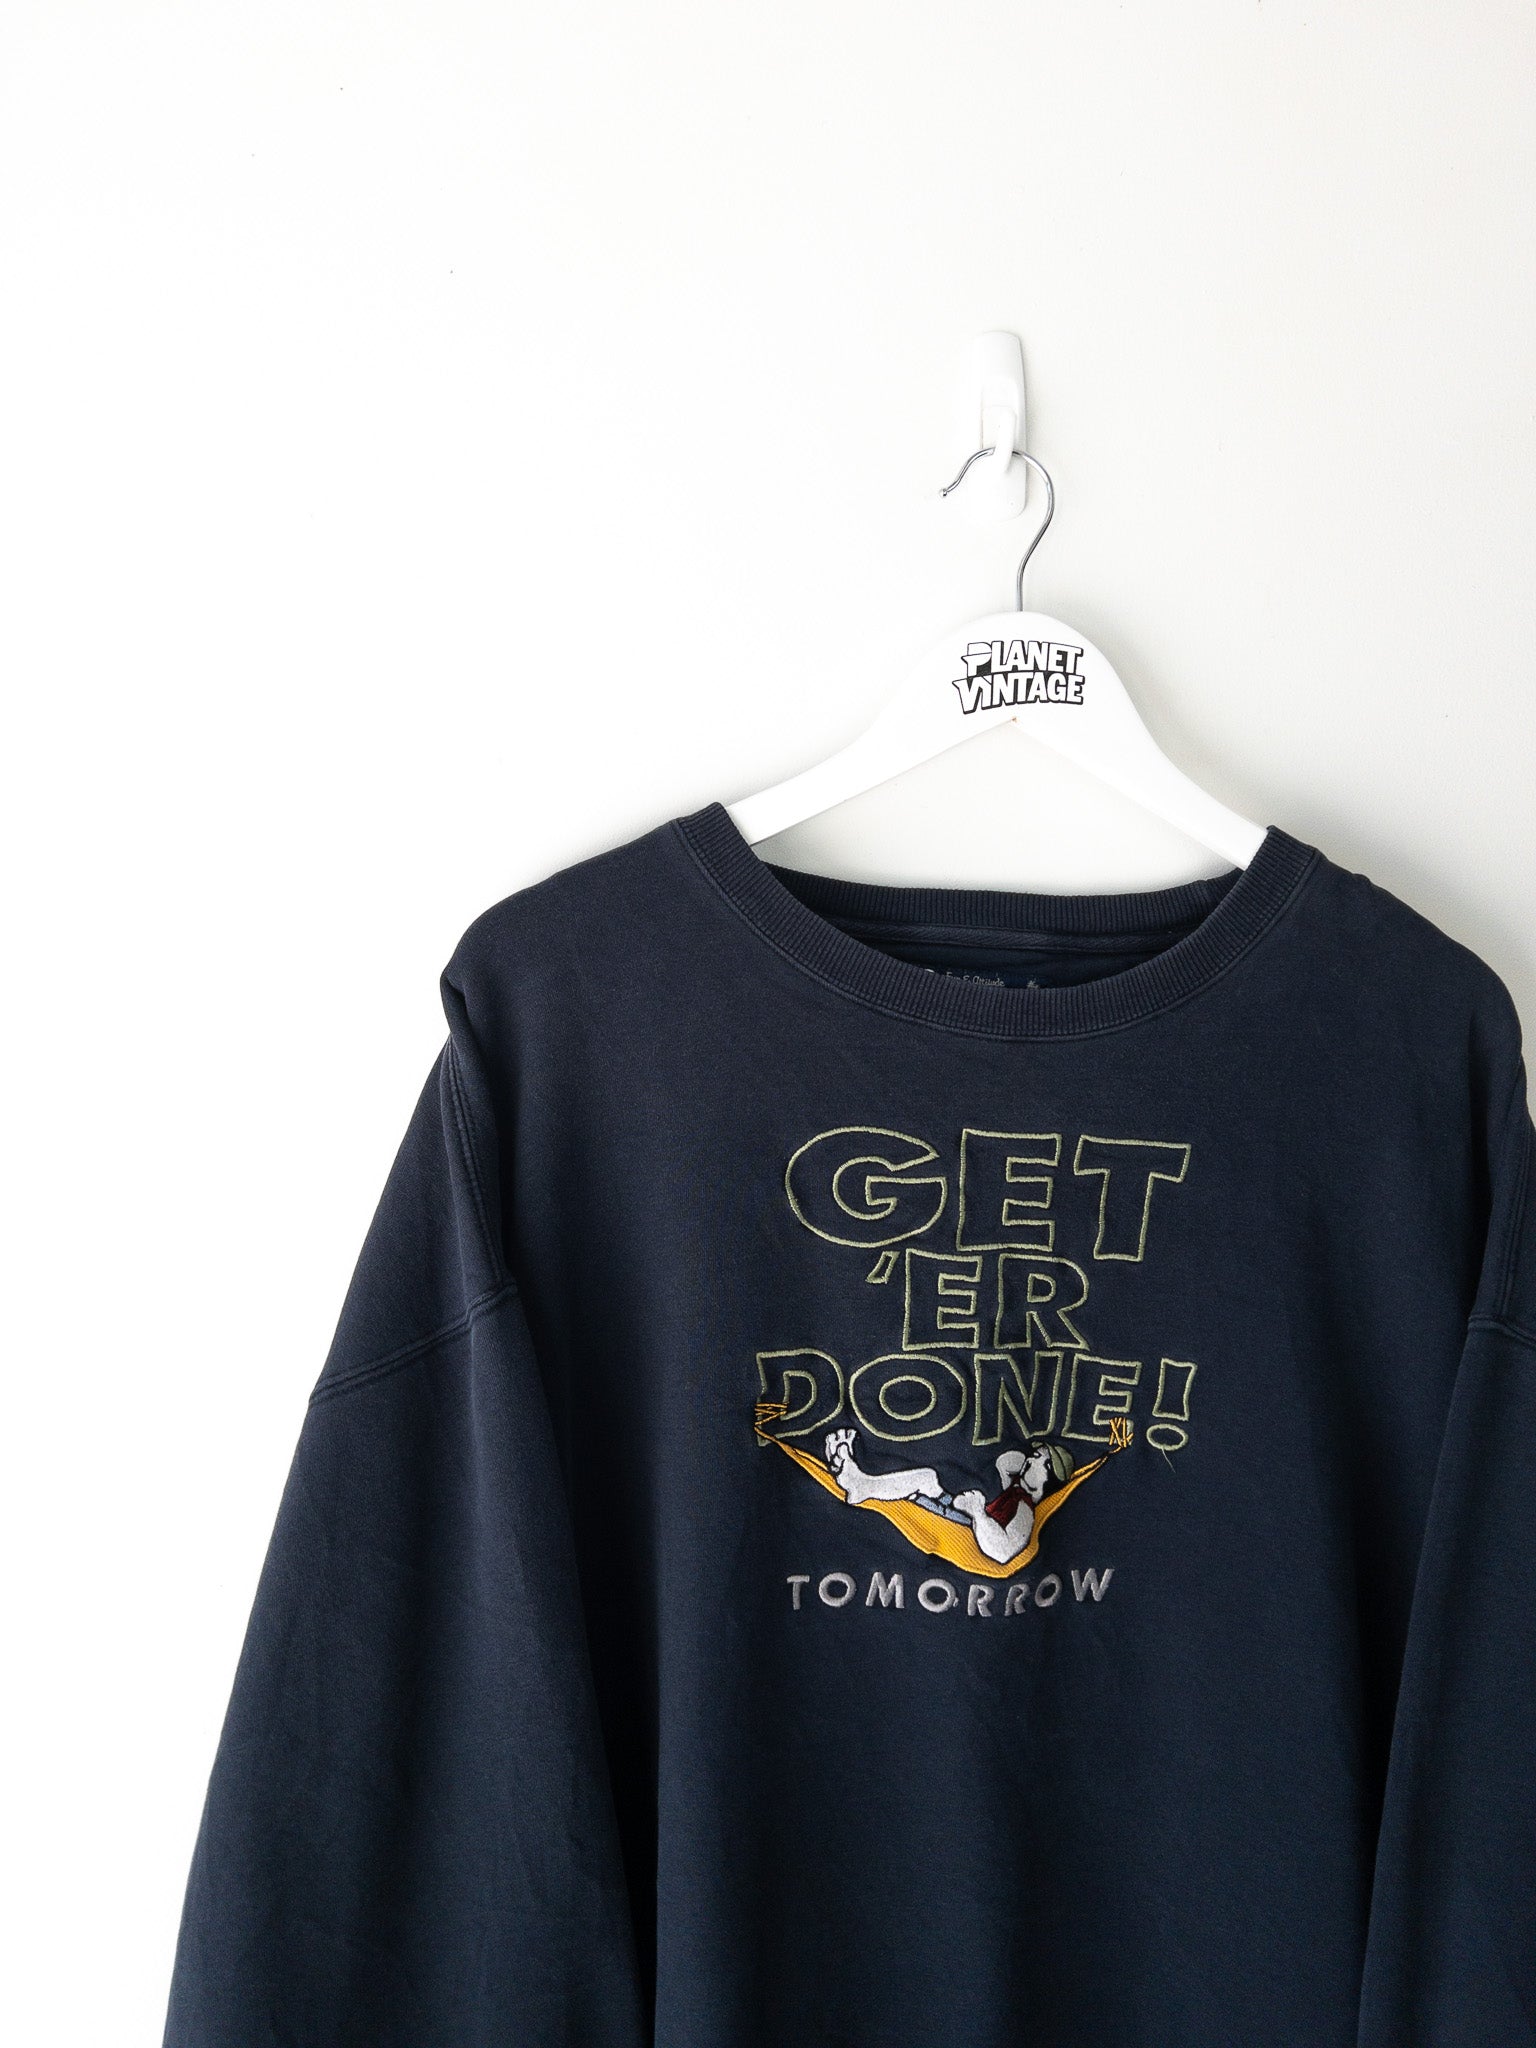 Vintage 'Get 'Er Done! Tomorrow' Sweatshirt (XL)